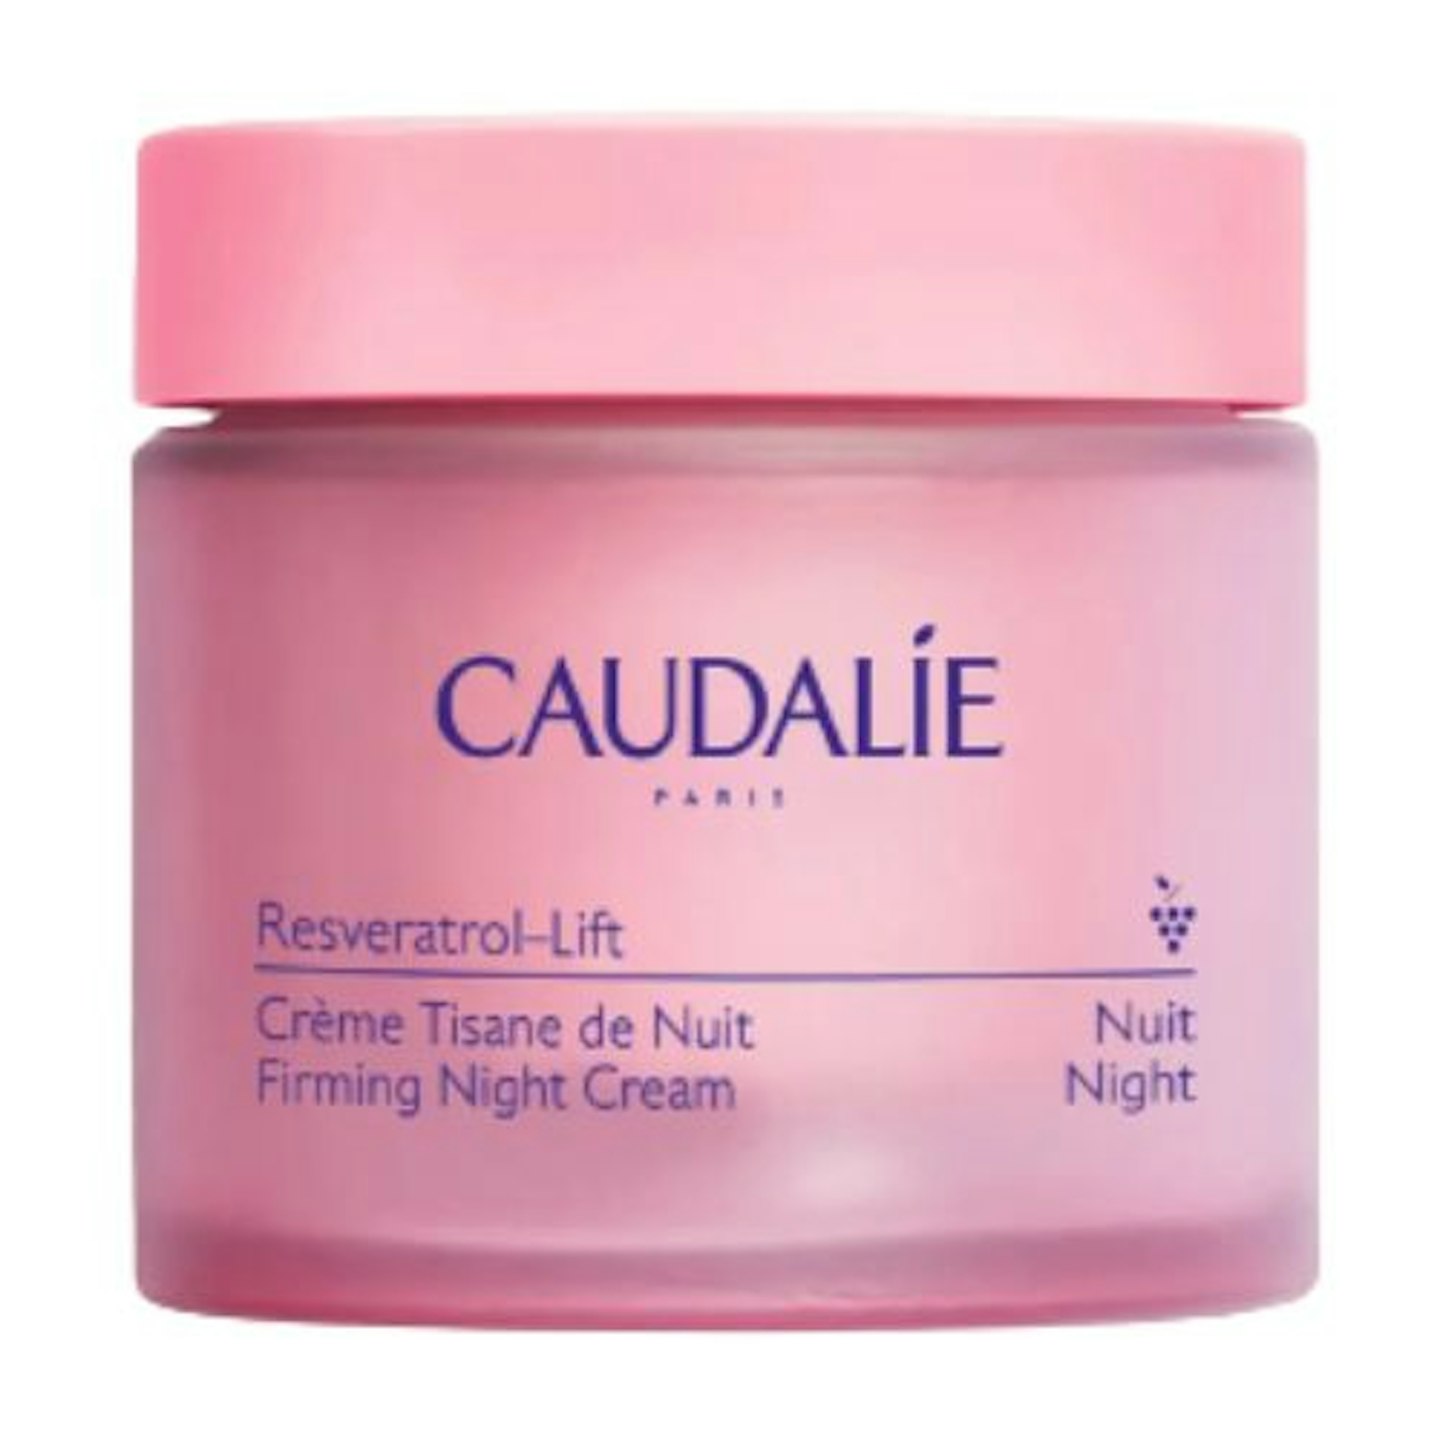 Caudalie Resveratrol-Lift Firming Night Cream